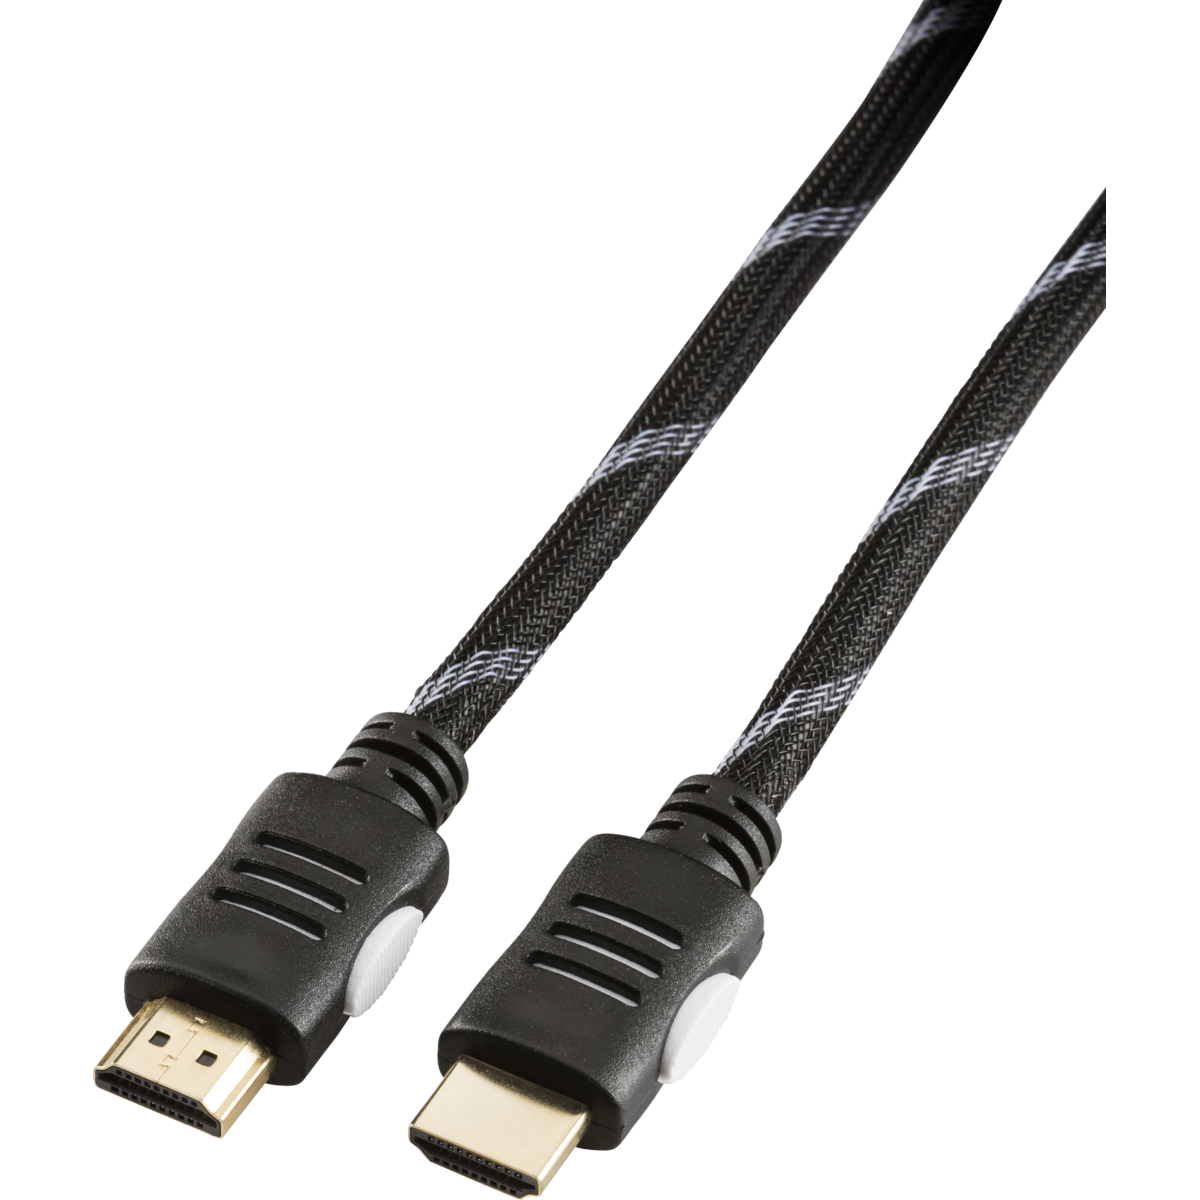 Knightsbridge AVHD4K2 4K High Speed HDMI Cable 2m